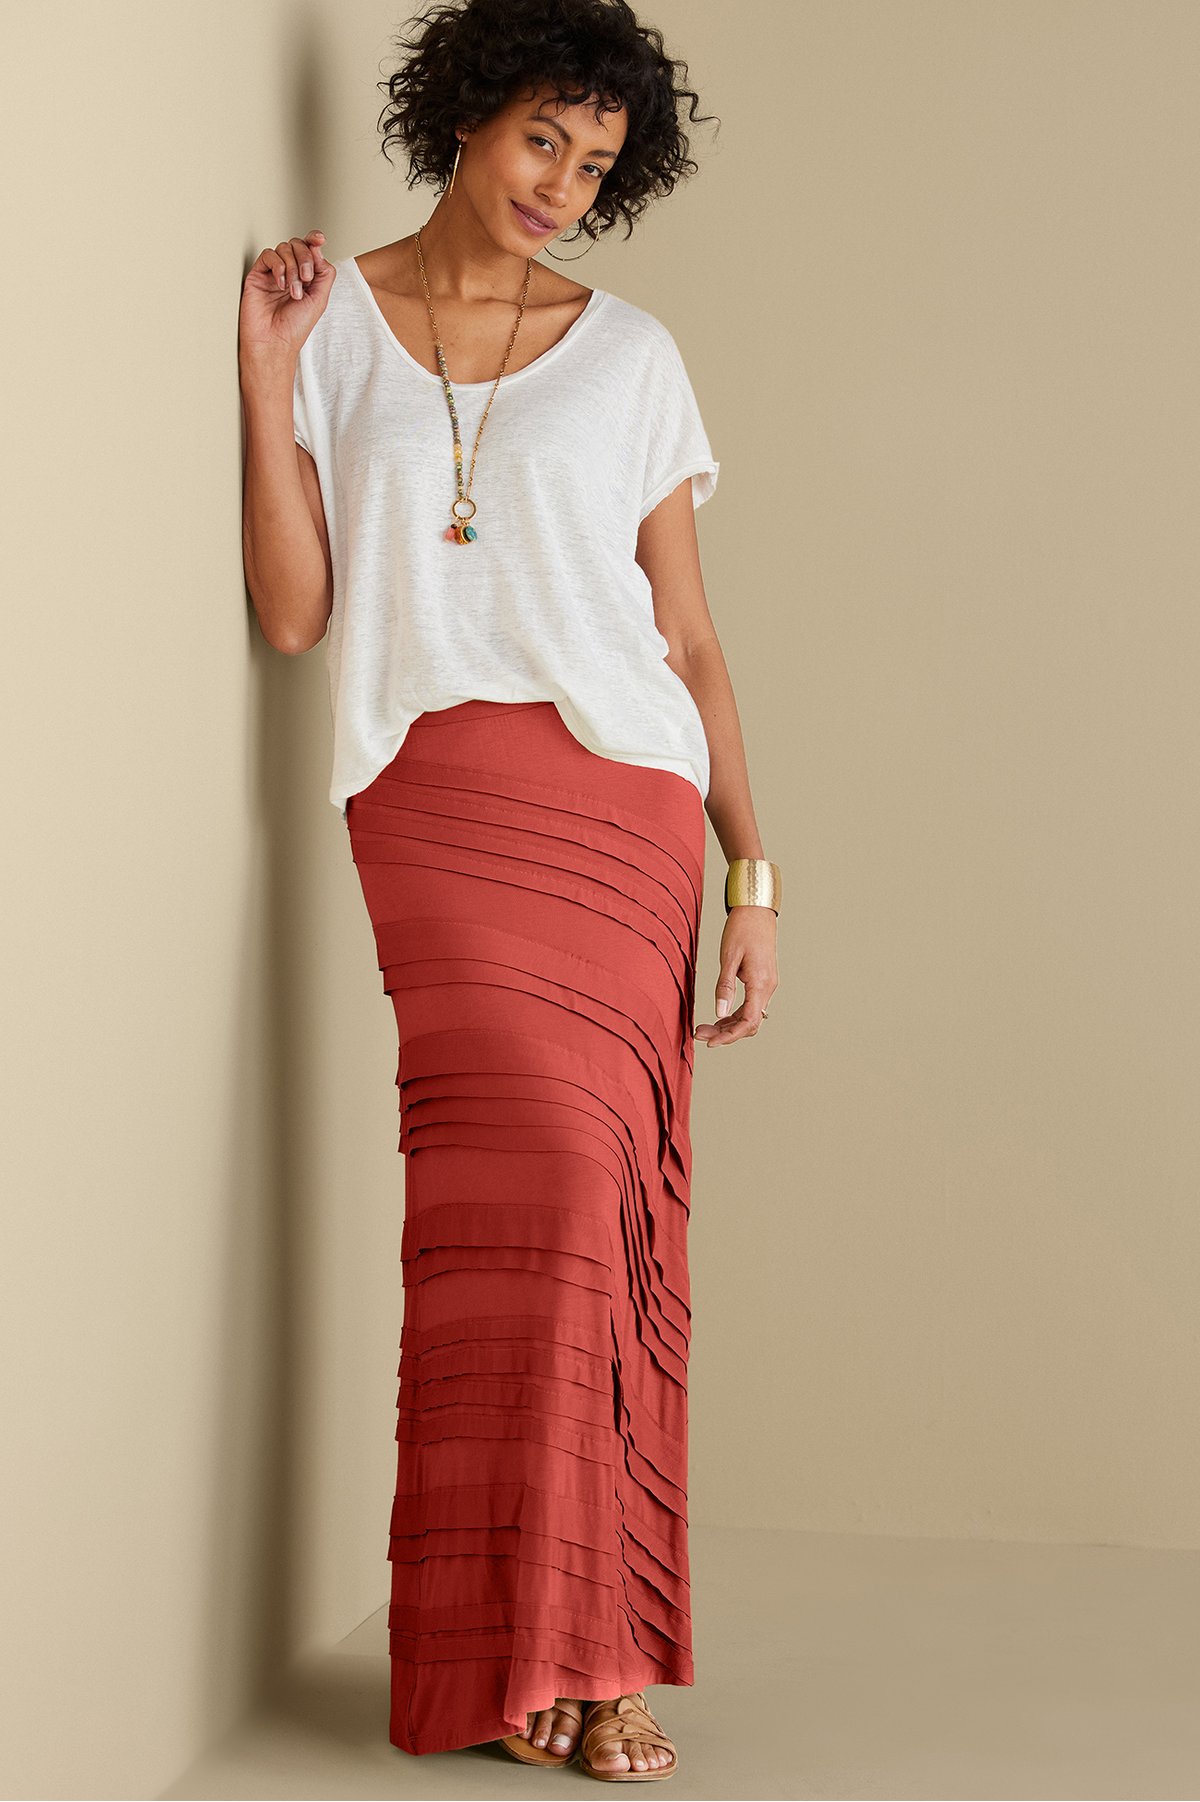 Women's Rosemary Skirt by Soft Surroundings, in Red Ochre size M (10-12)